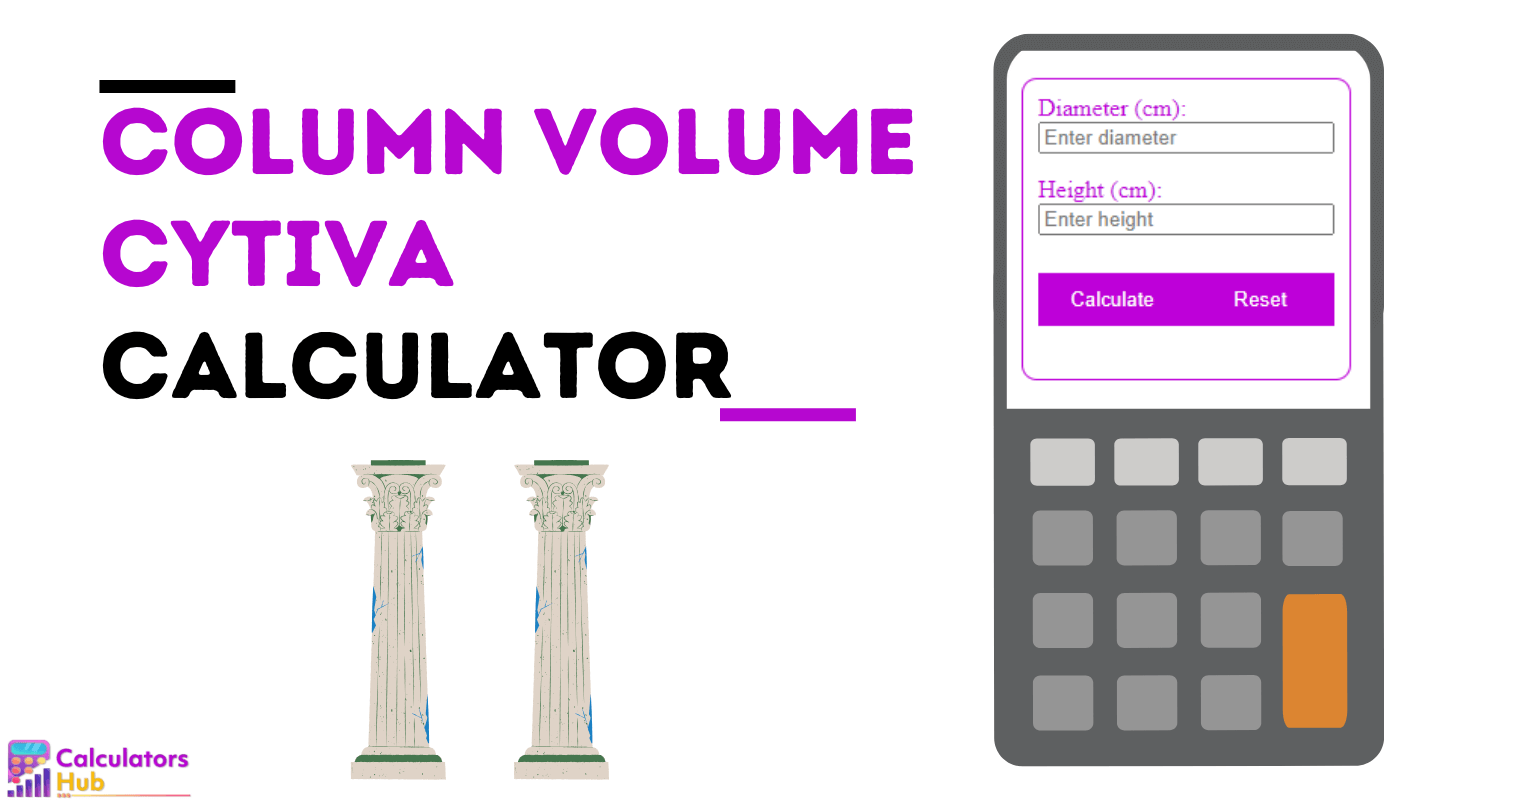 Column Volume Calculator Cytiva